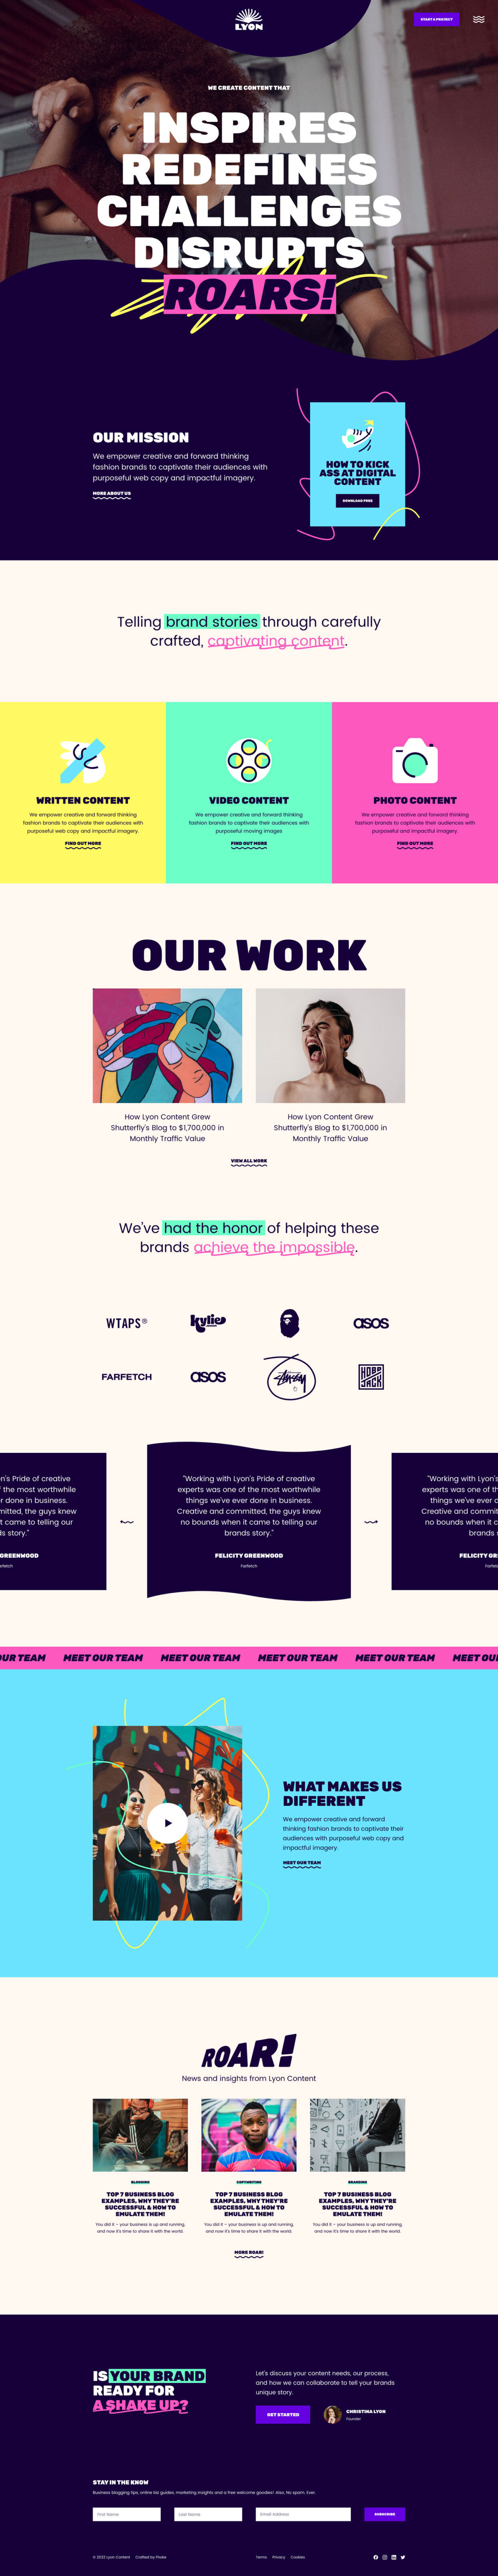 Lyon Content WordPress website design by London digital design agency Fhoke